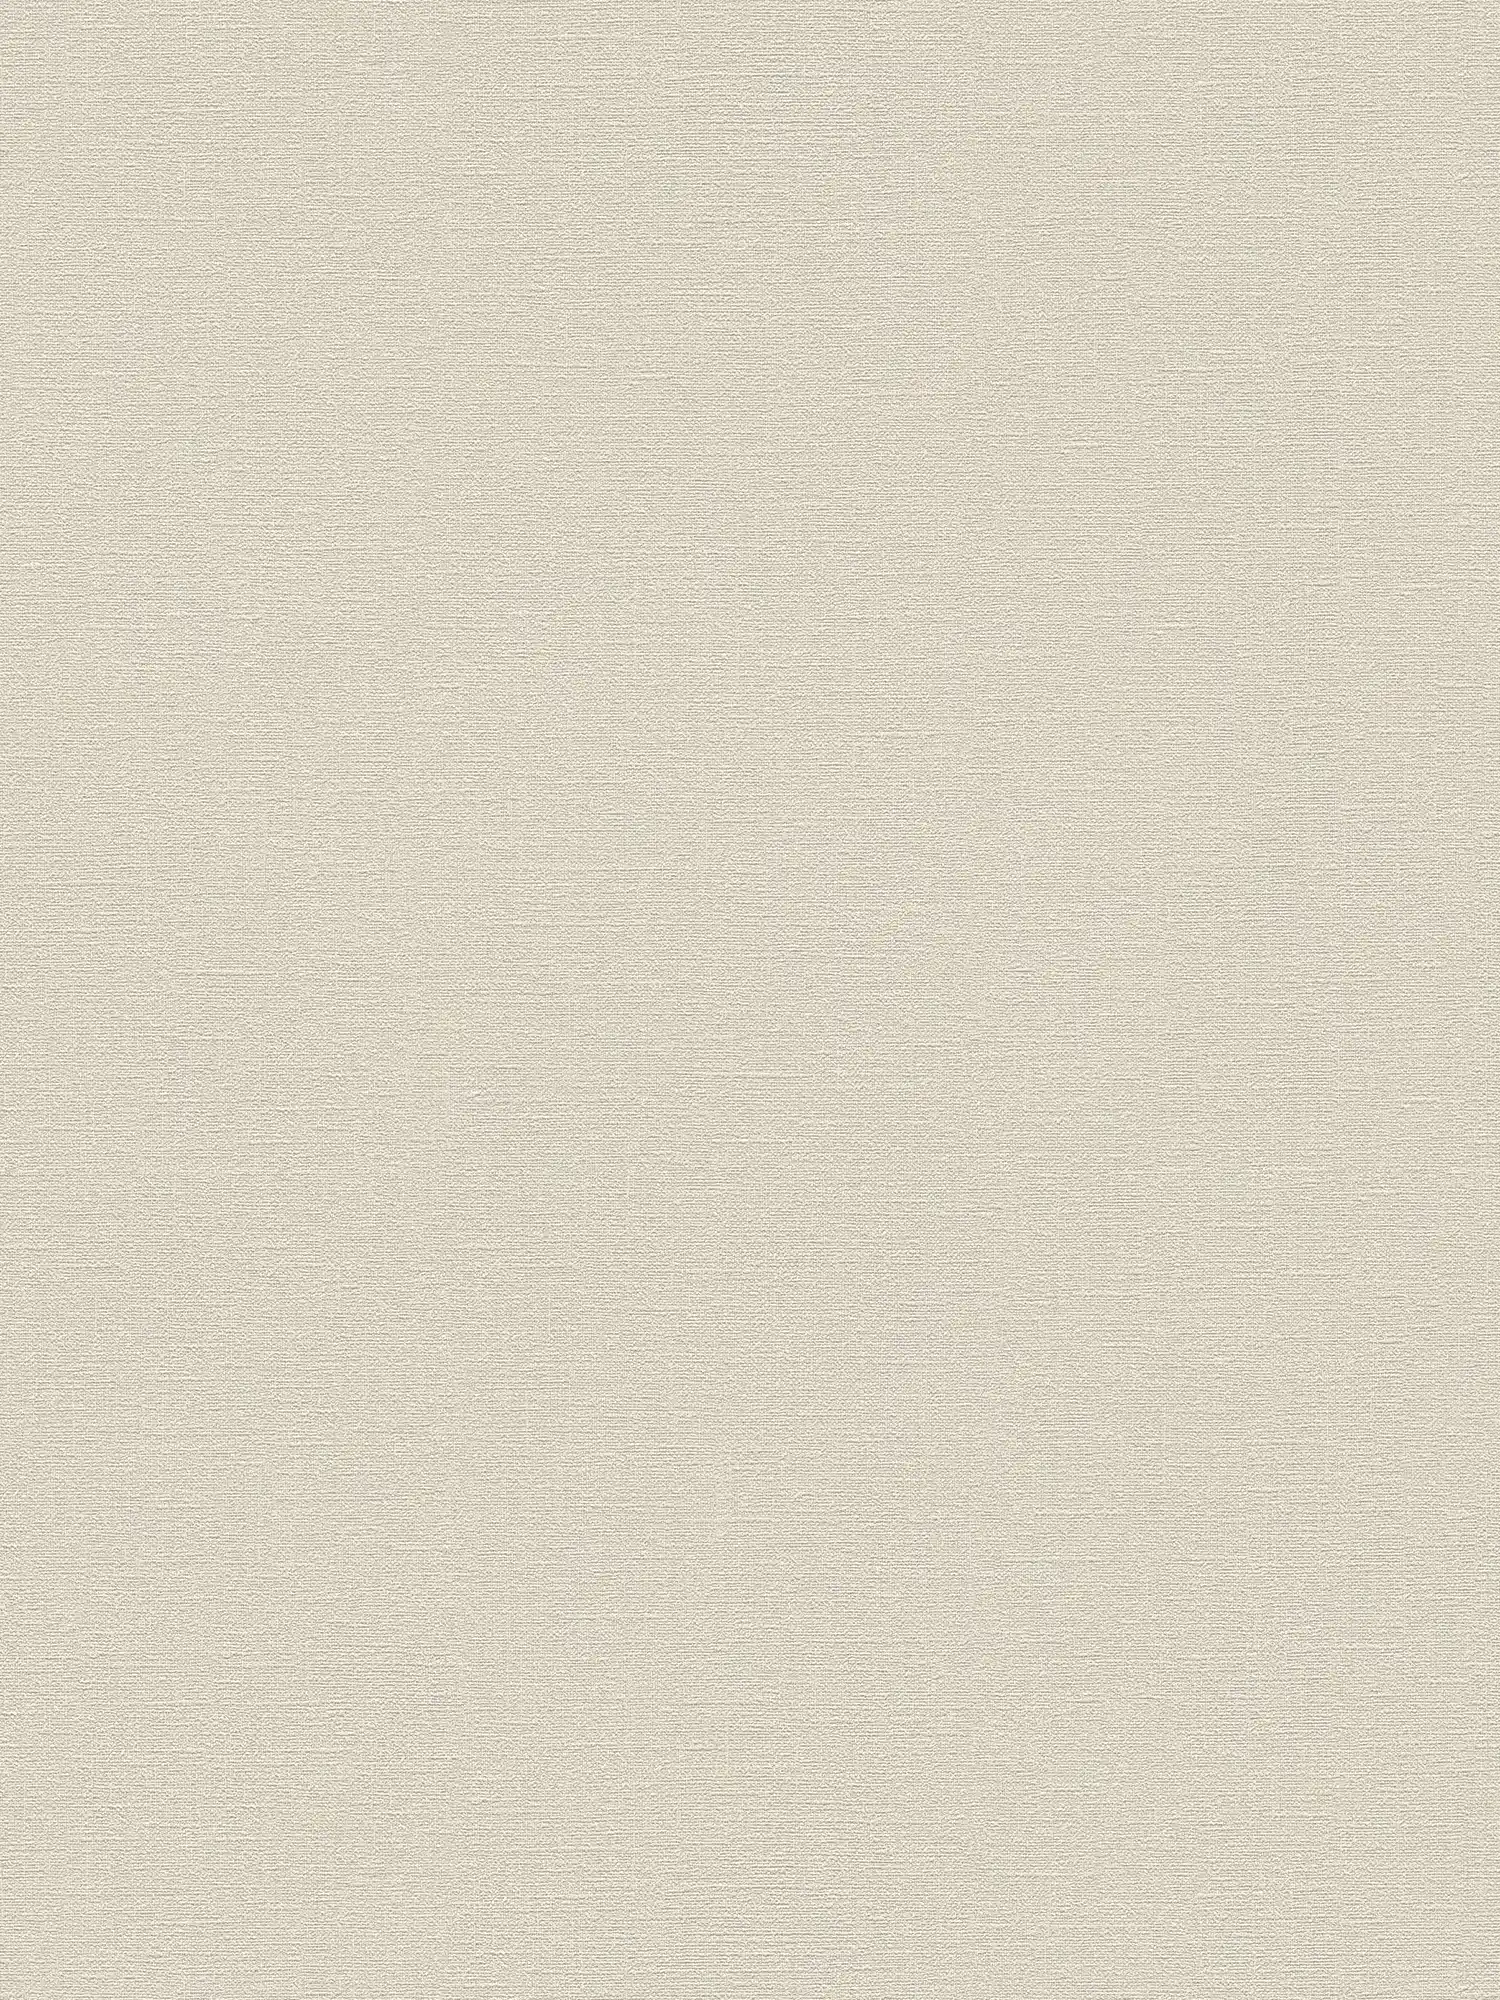 Plain wallpaper with fine structure PVC-free non-woven - Beige, Grey
